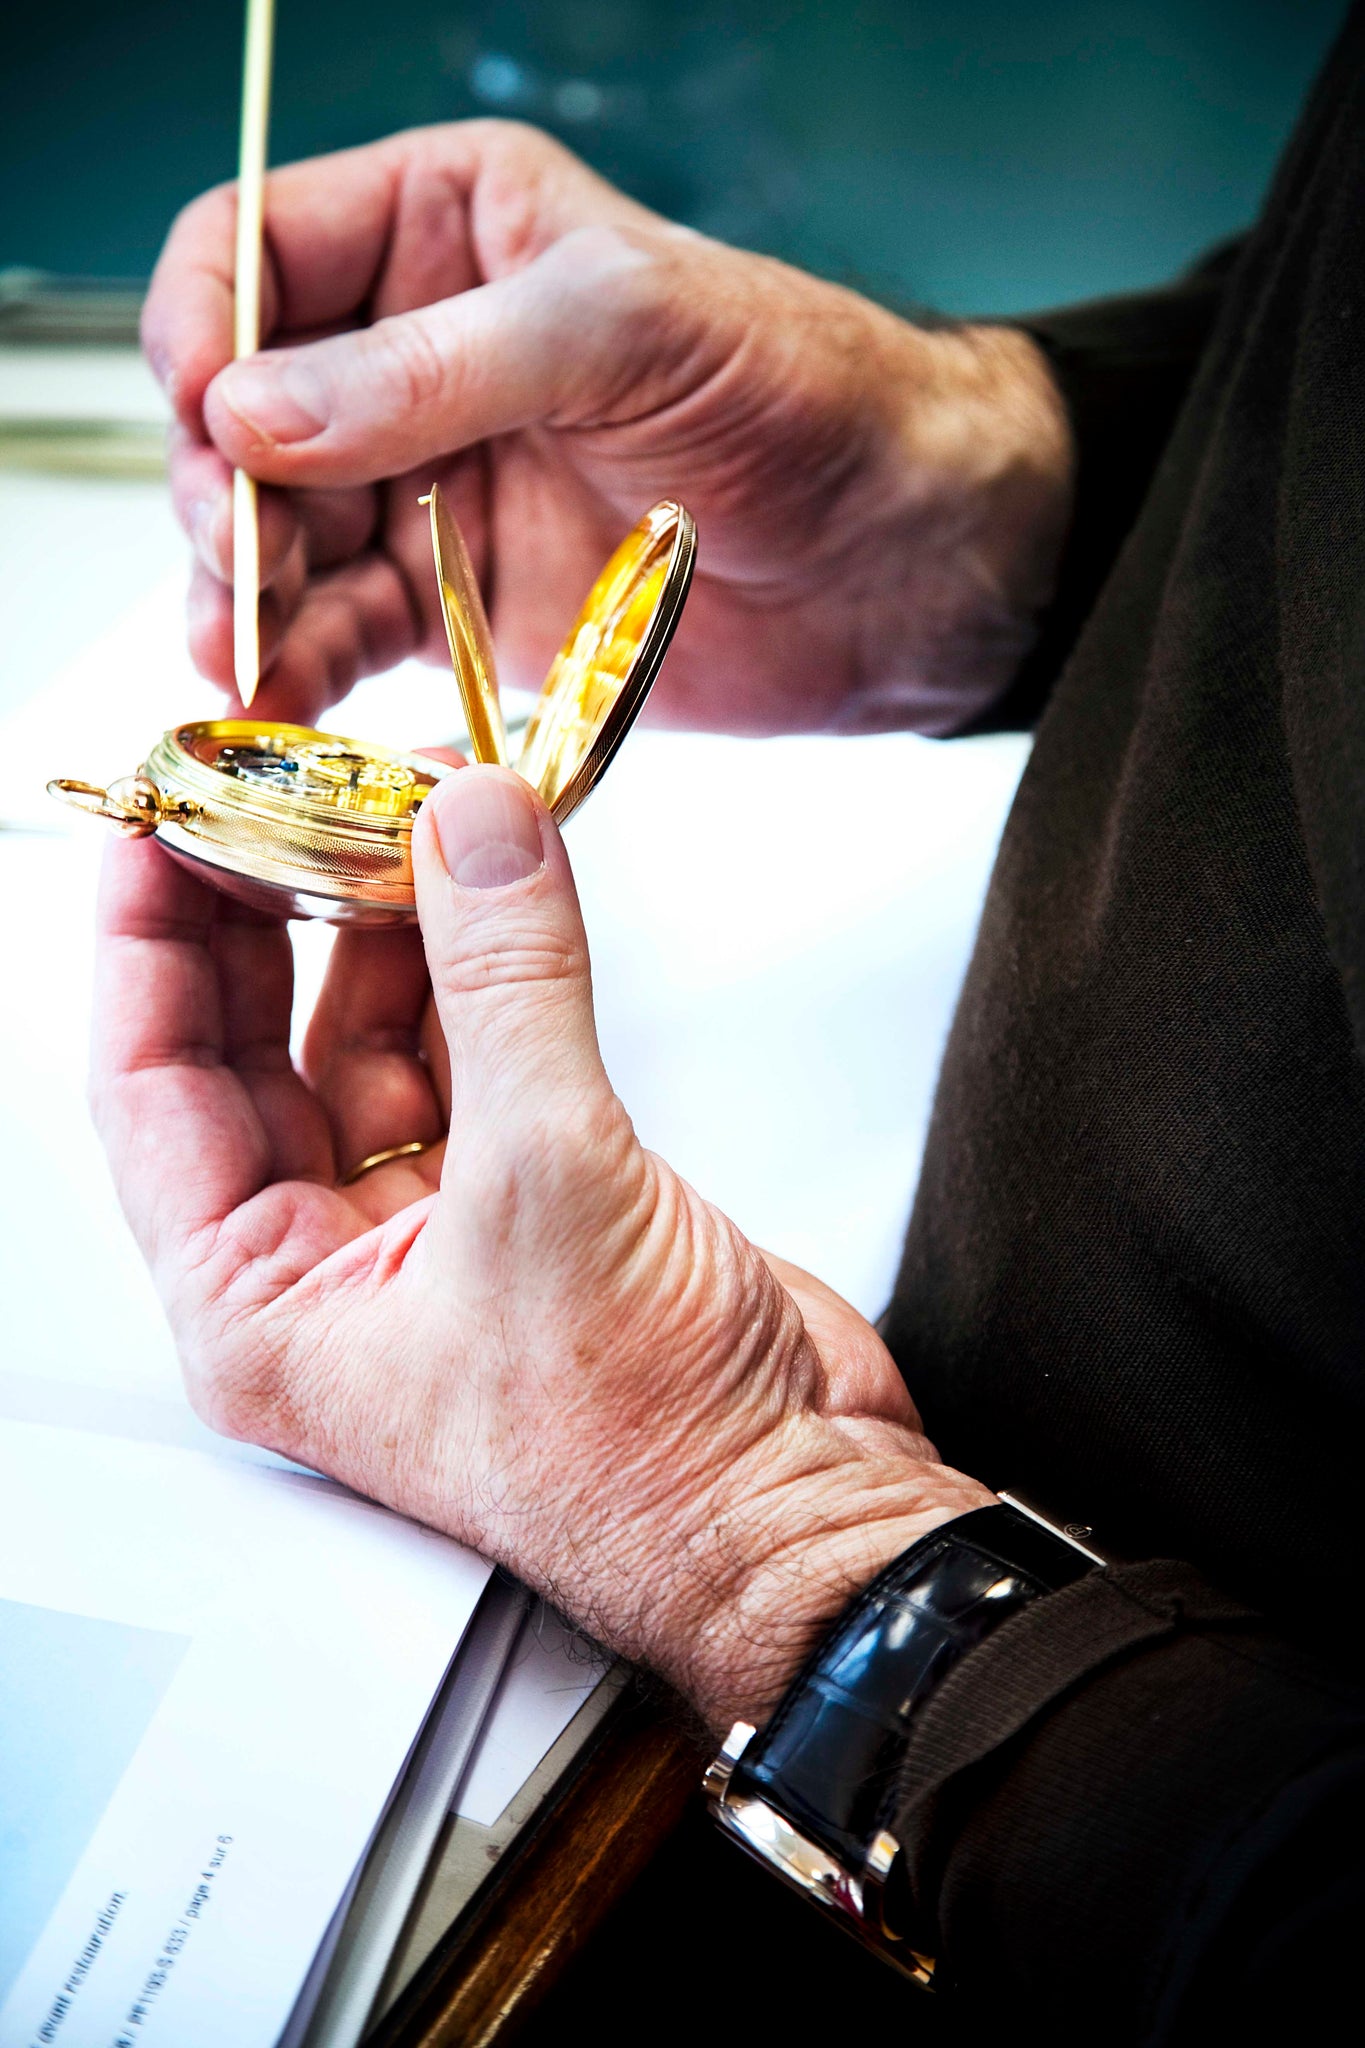 Parmigiani adjusting a pocket watch with a peg wood tool, courtesy of Parmigiani Fleurier.